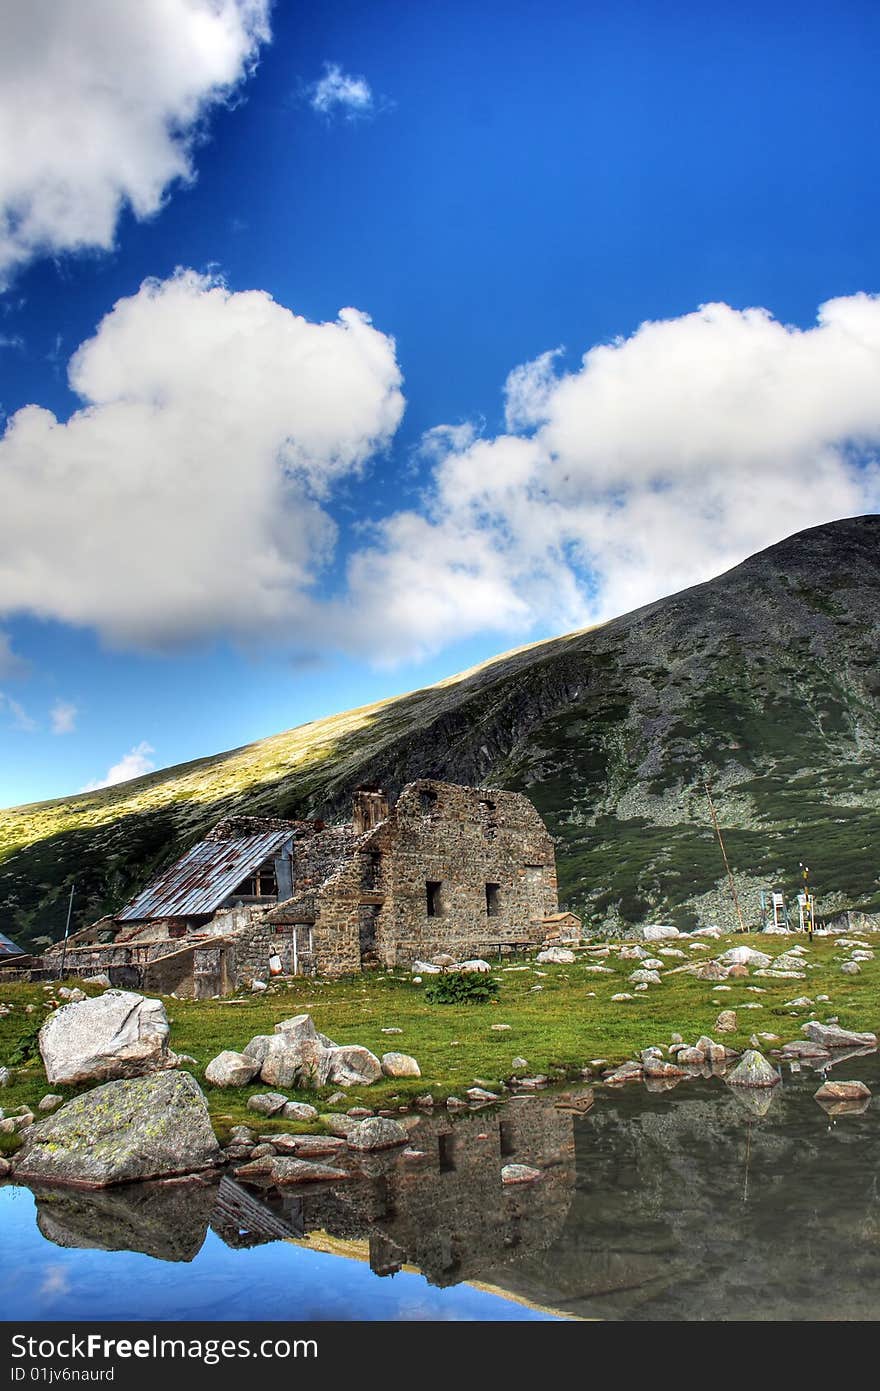 An old ruin in the bulgarian mountains (Rila). An old ruin in the bulgarian mountains (Rila)